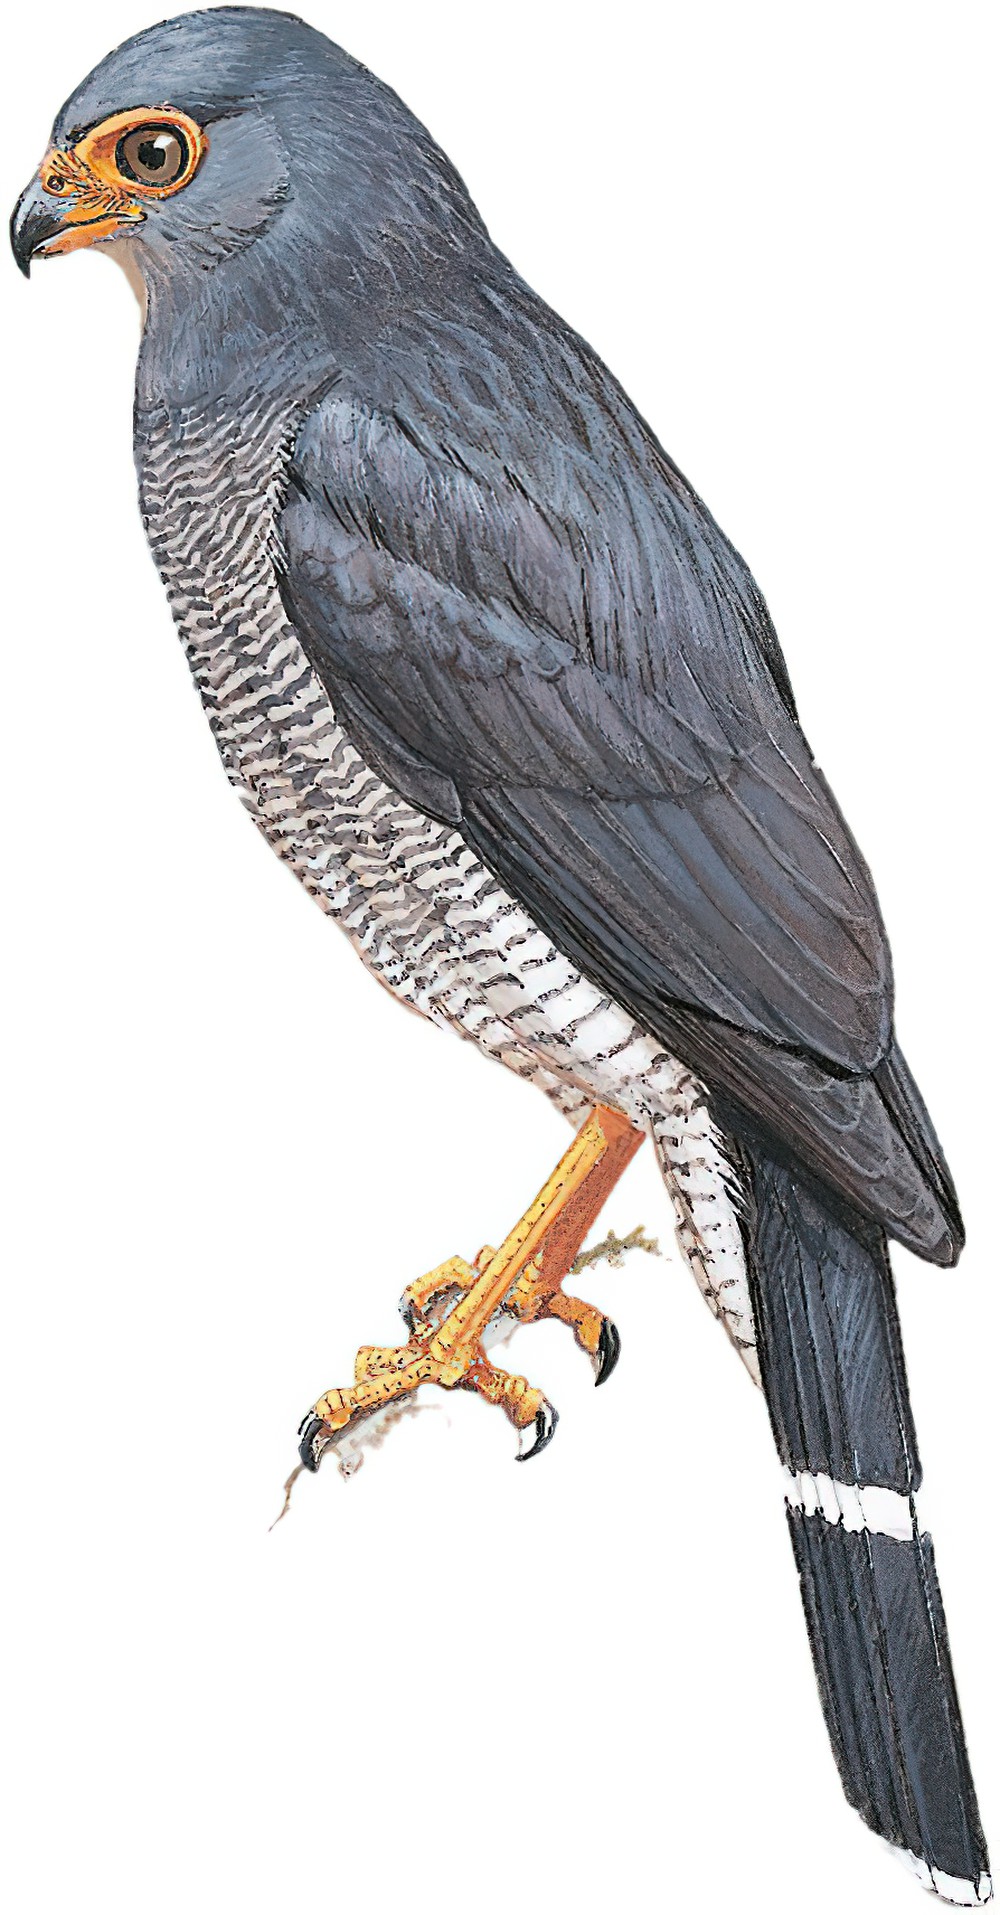 Plumbeous Forest-Falcon / Micrastur plumbeus